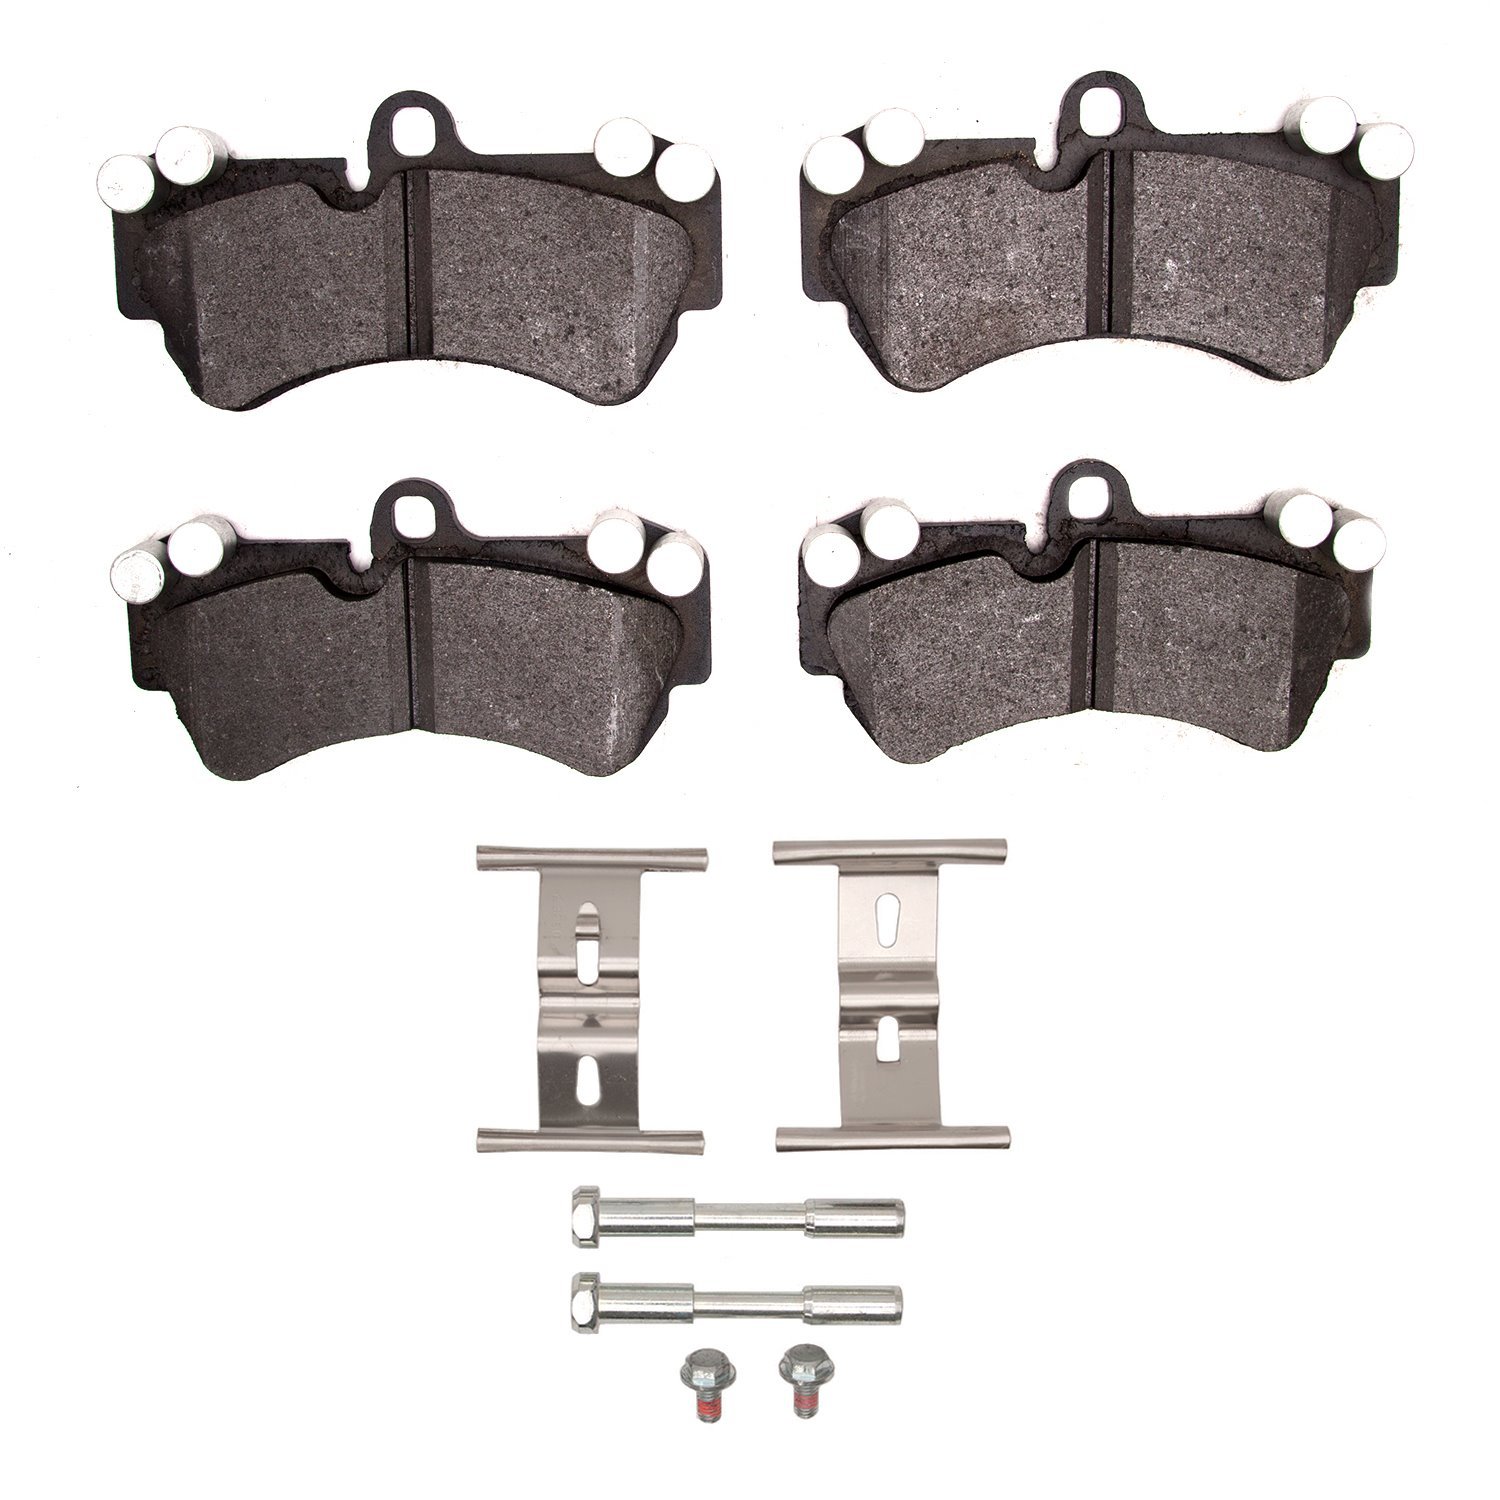 Semi-Metallic Brake Pads & Hardware Kit, 2003-2018 Fits Multiple Makes/Models, Position: Front